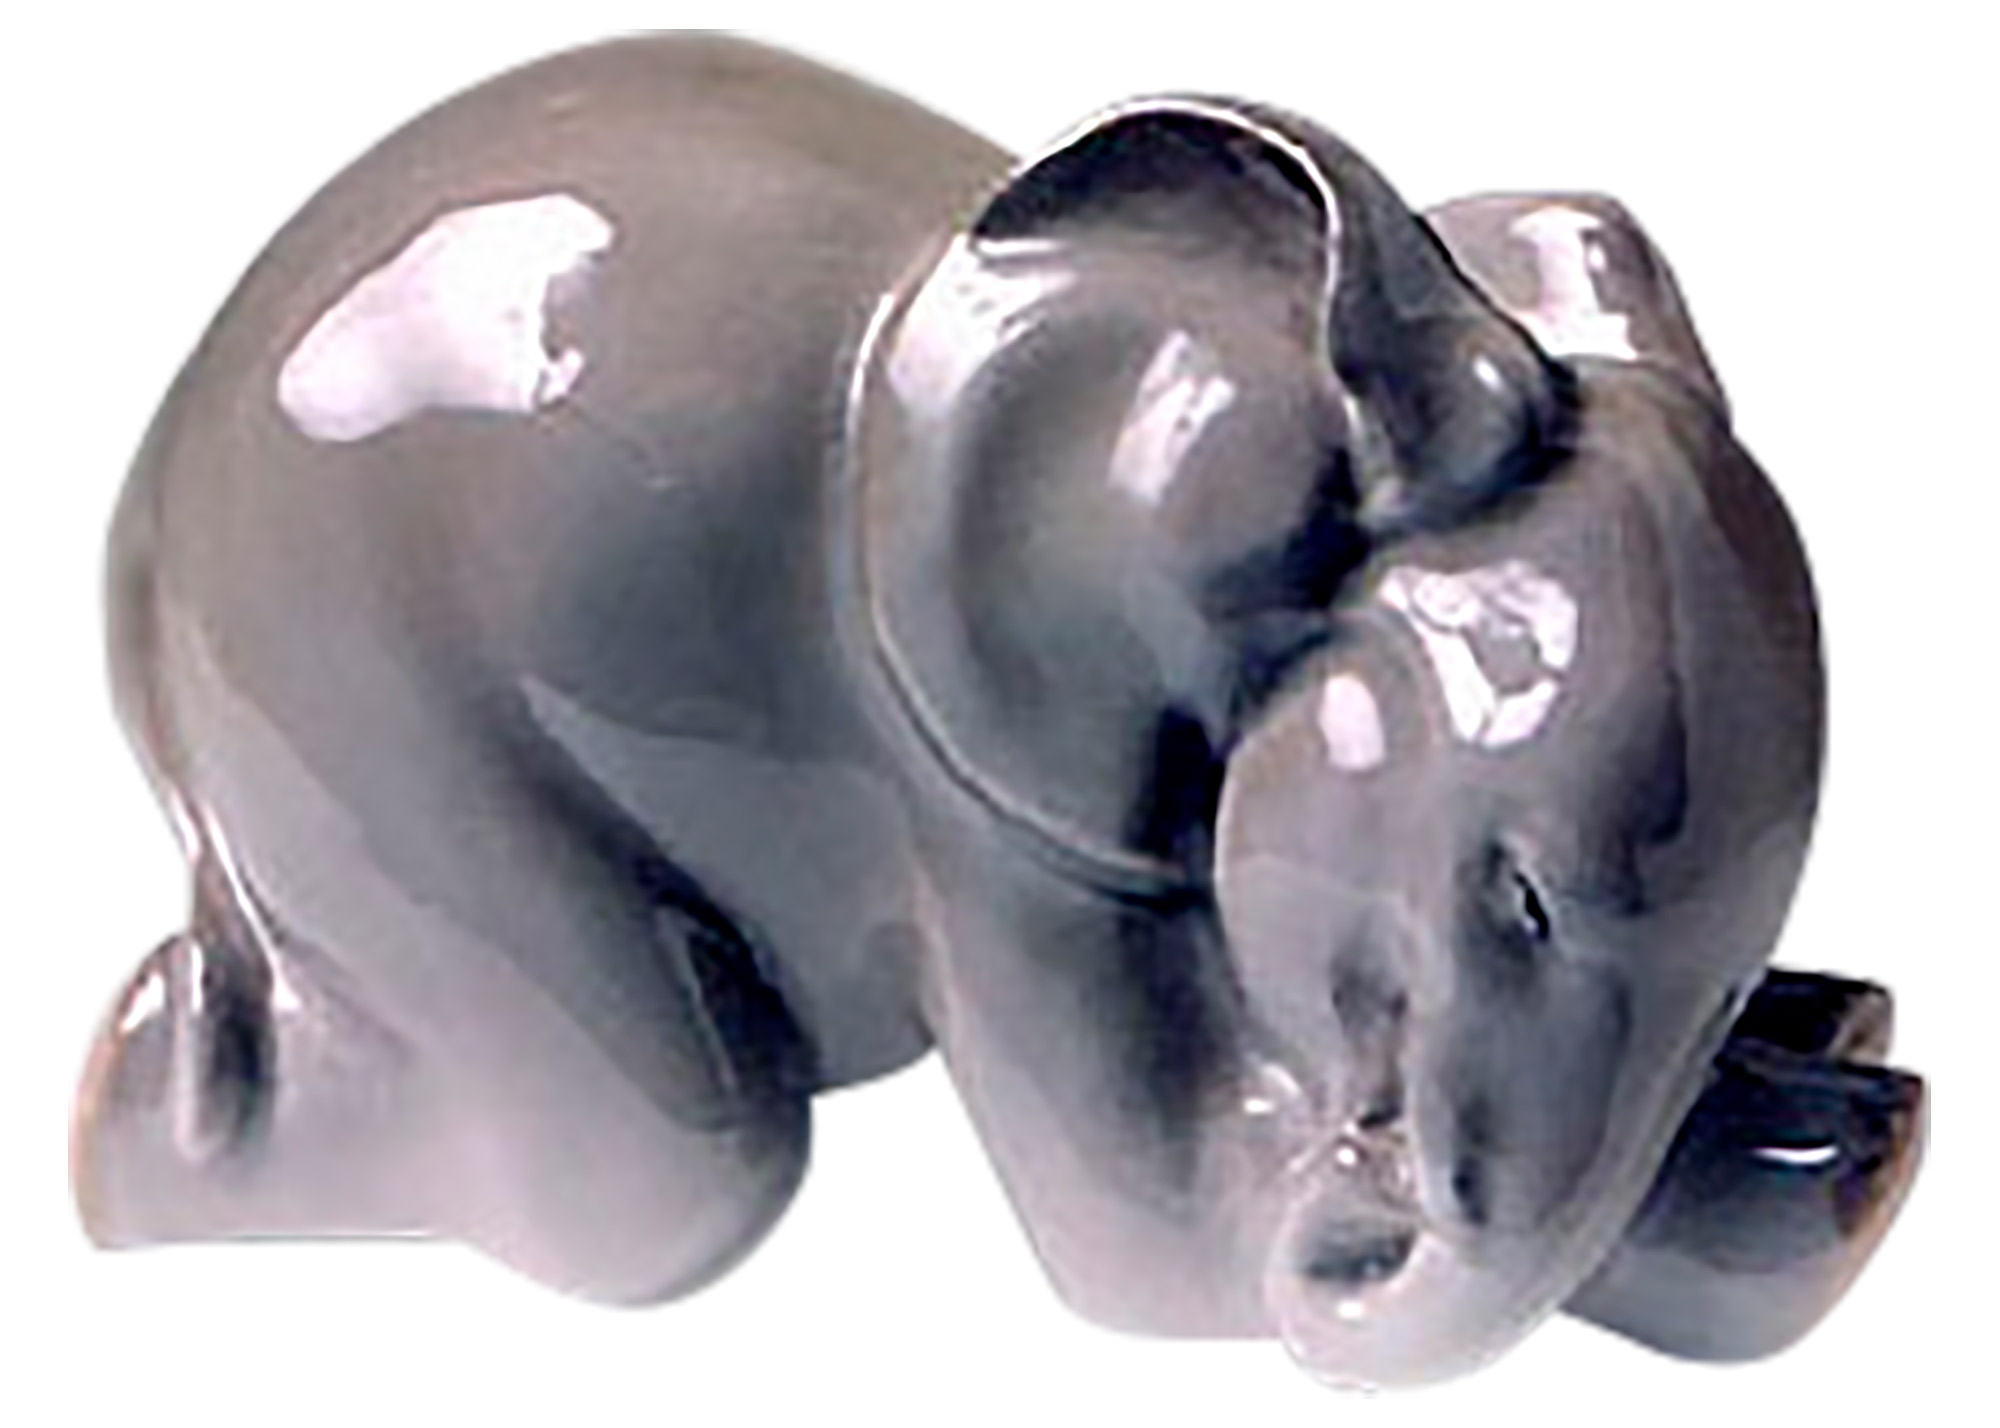 Buy Baby Elephant Figurine at GoldenCockerel.com